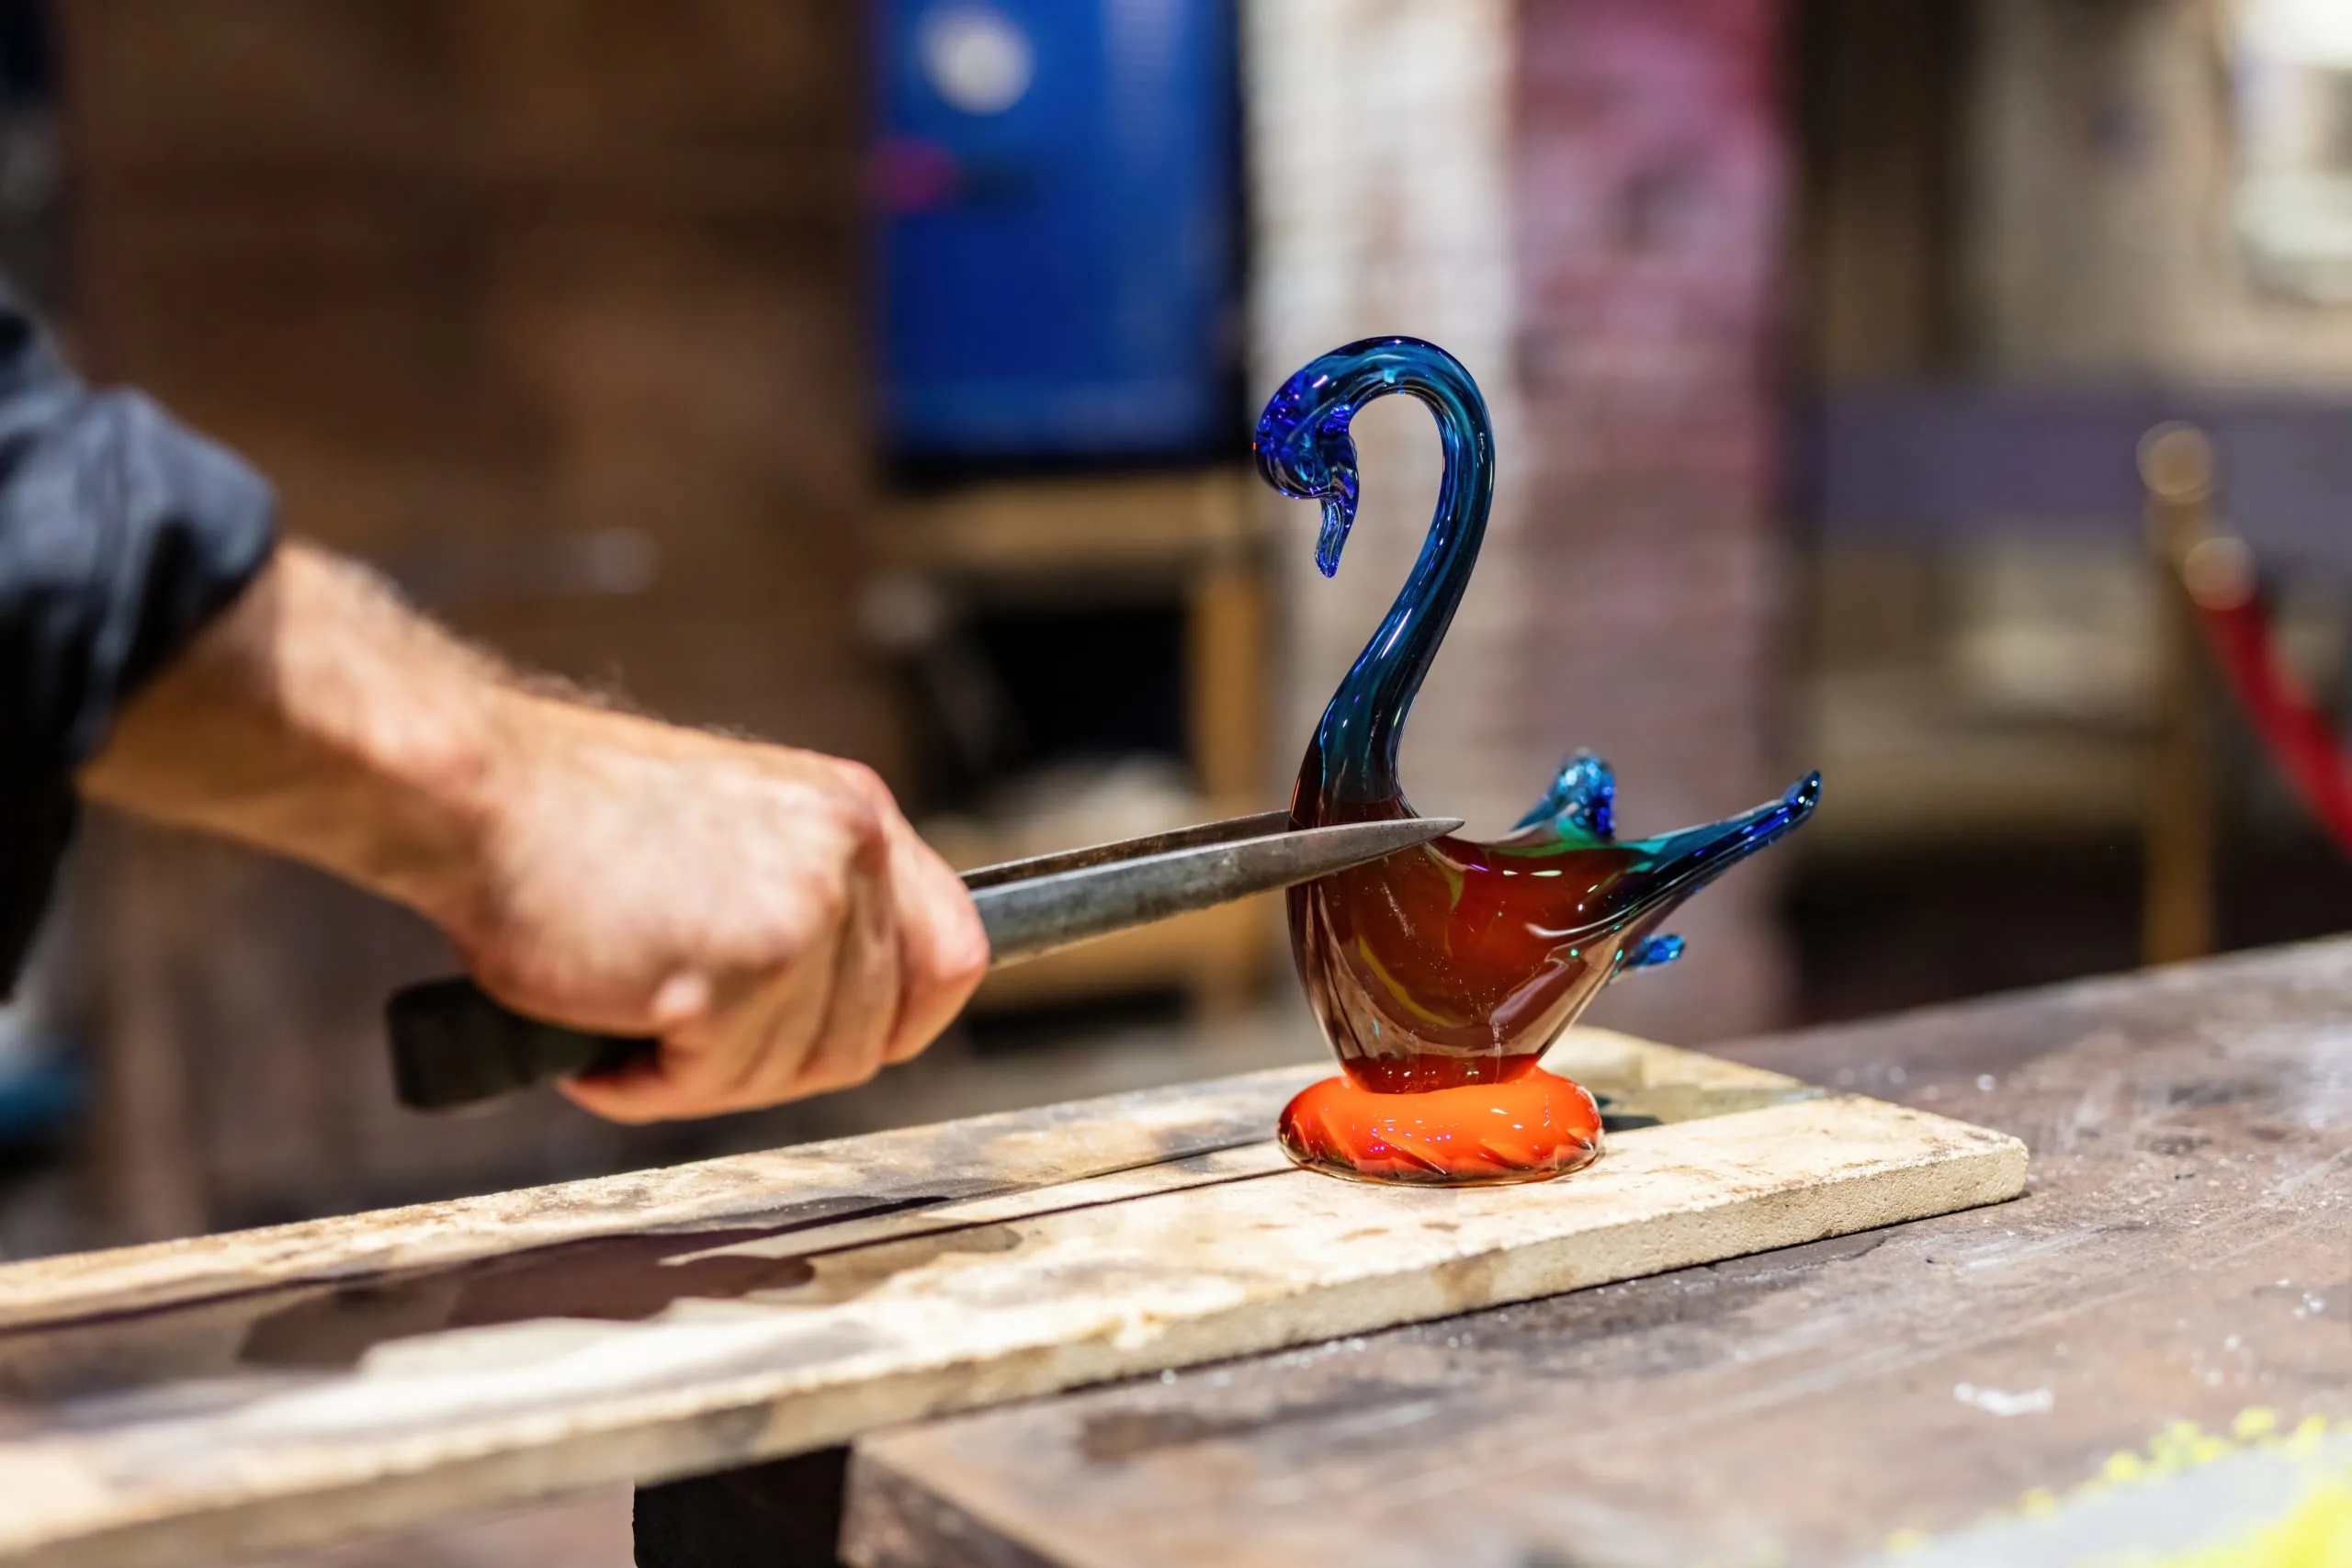 Glass blower at work in workshop in Murano, Italy, making handmade glassware